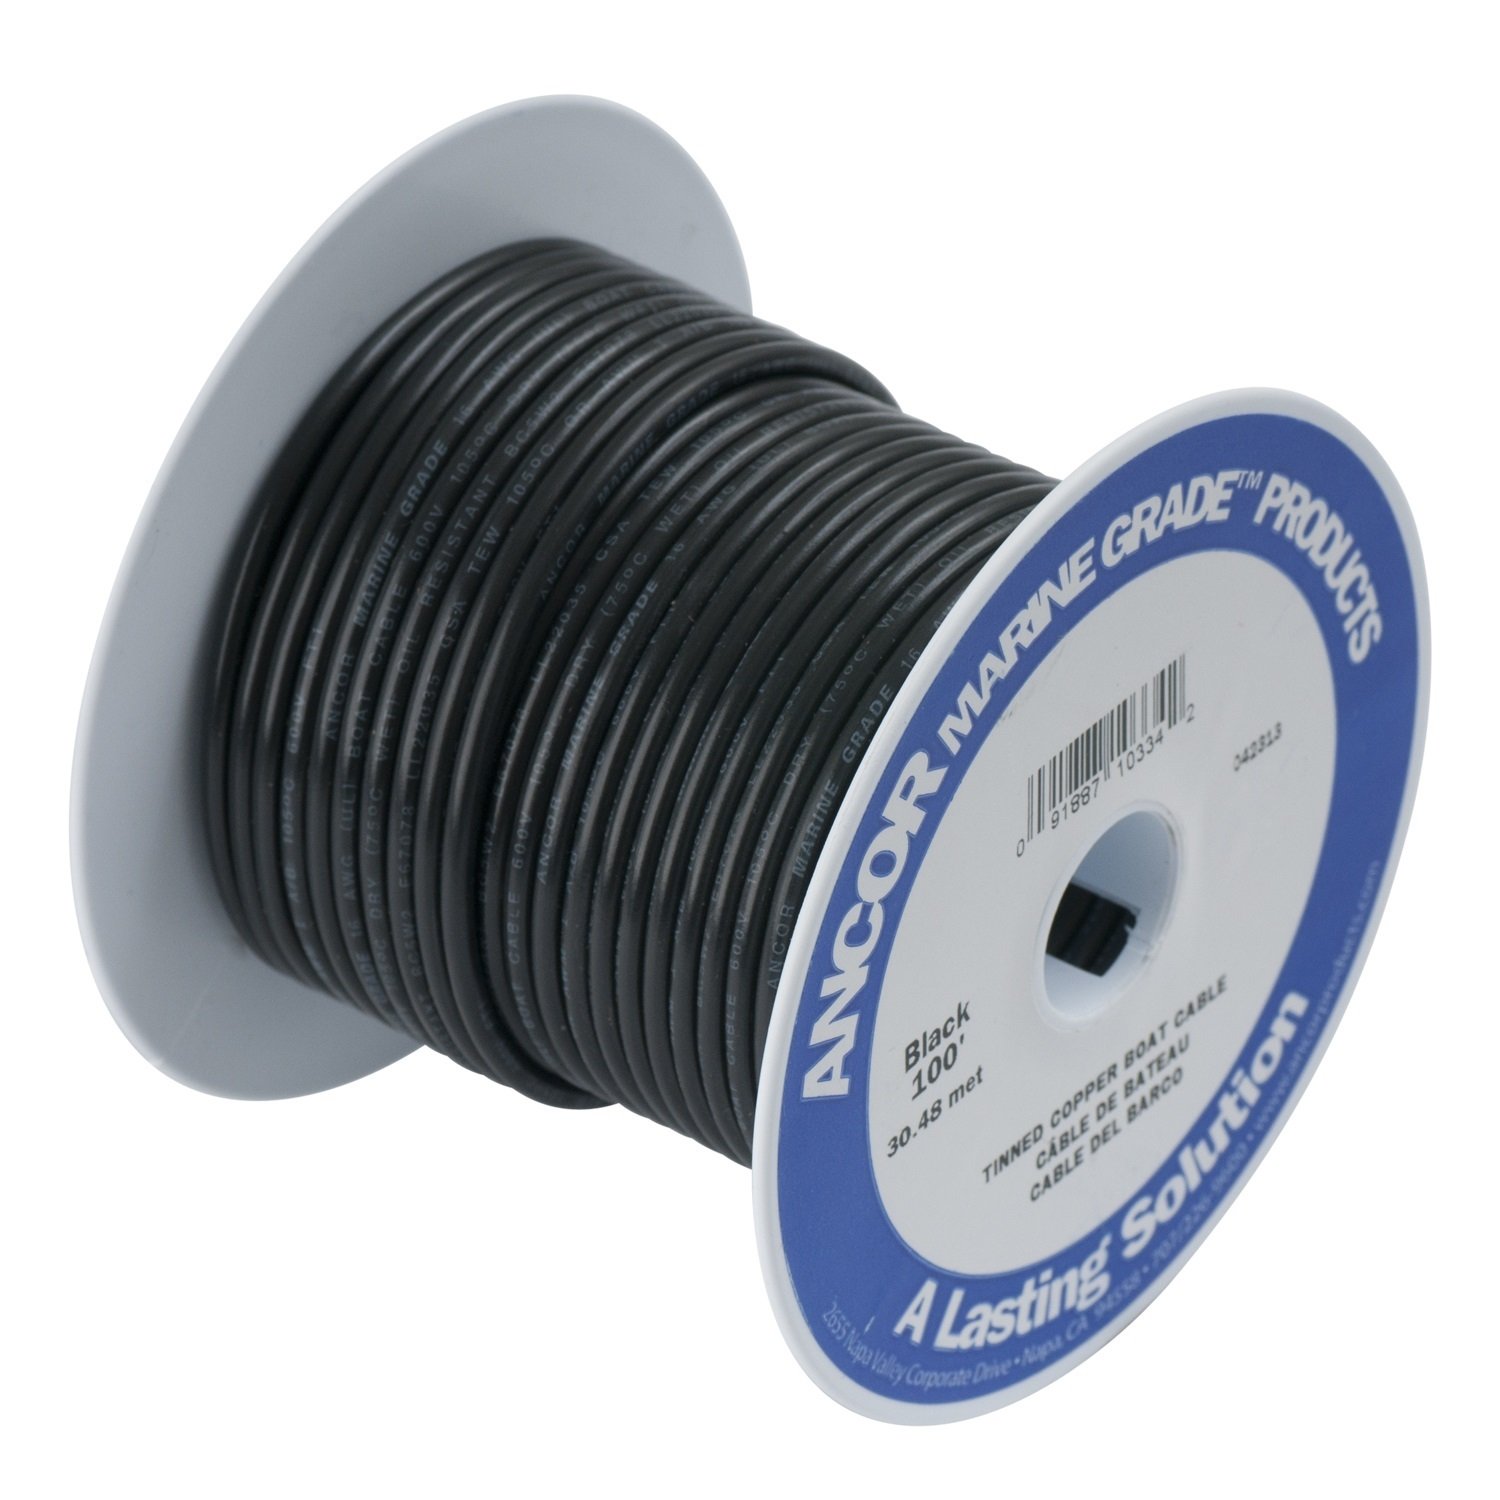 ANCOR MARINE GRADE 113010 镀锡铜电池电缆，4 AWG (19mm2)，黑色 - 100 英尺